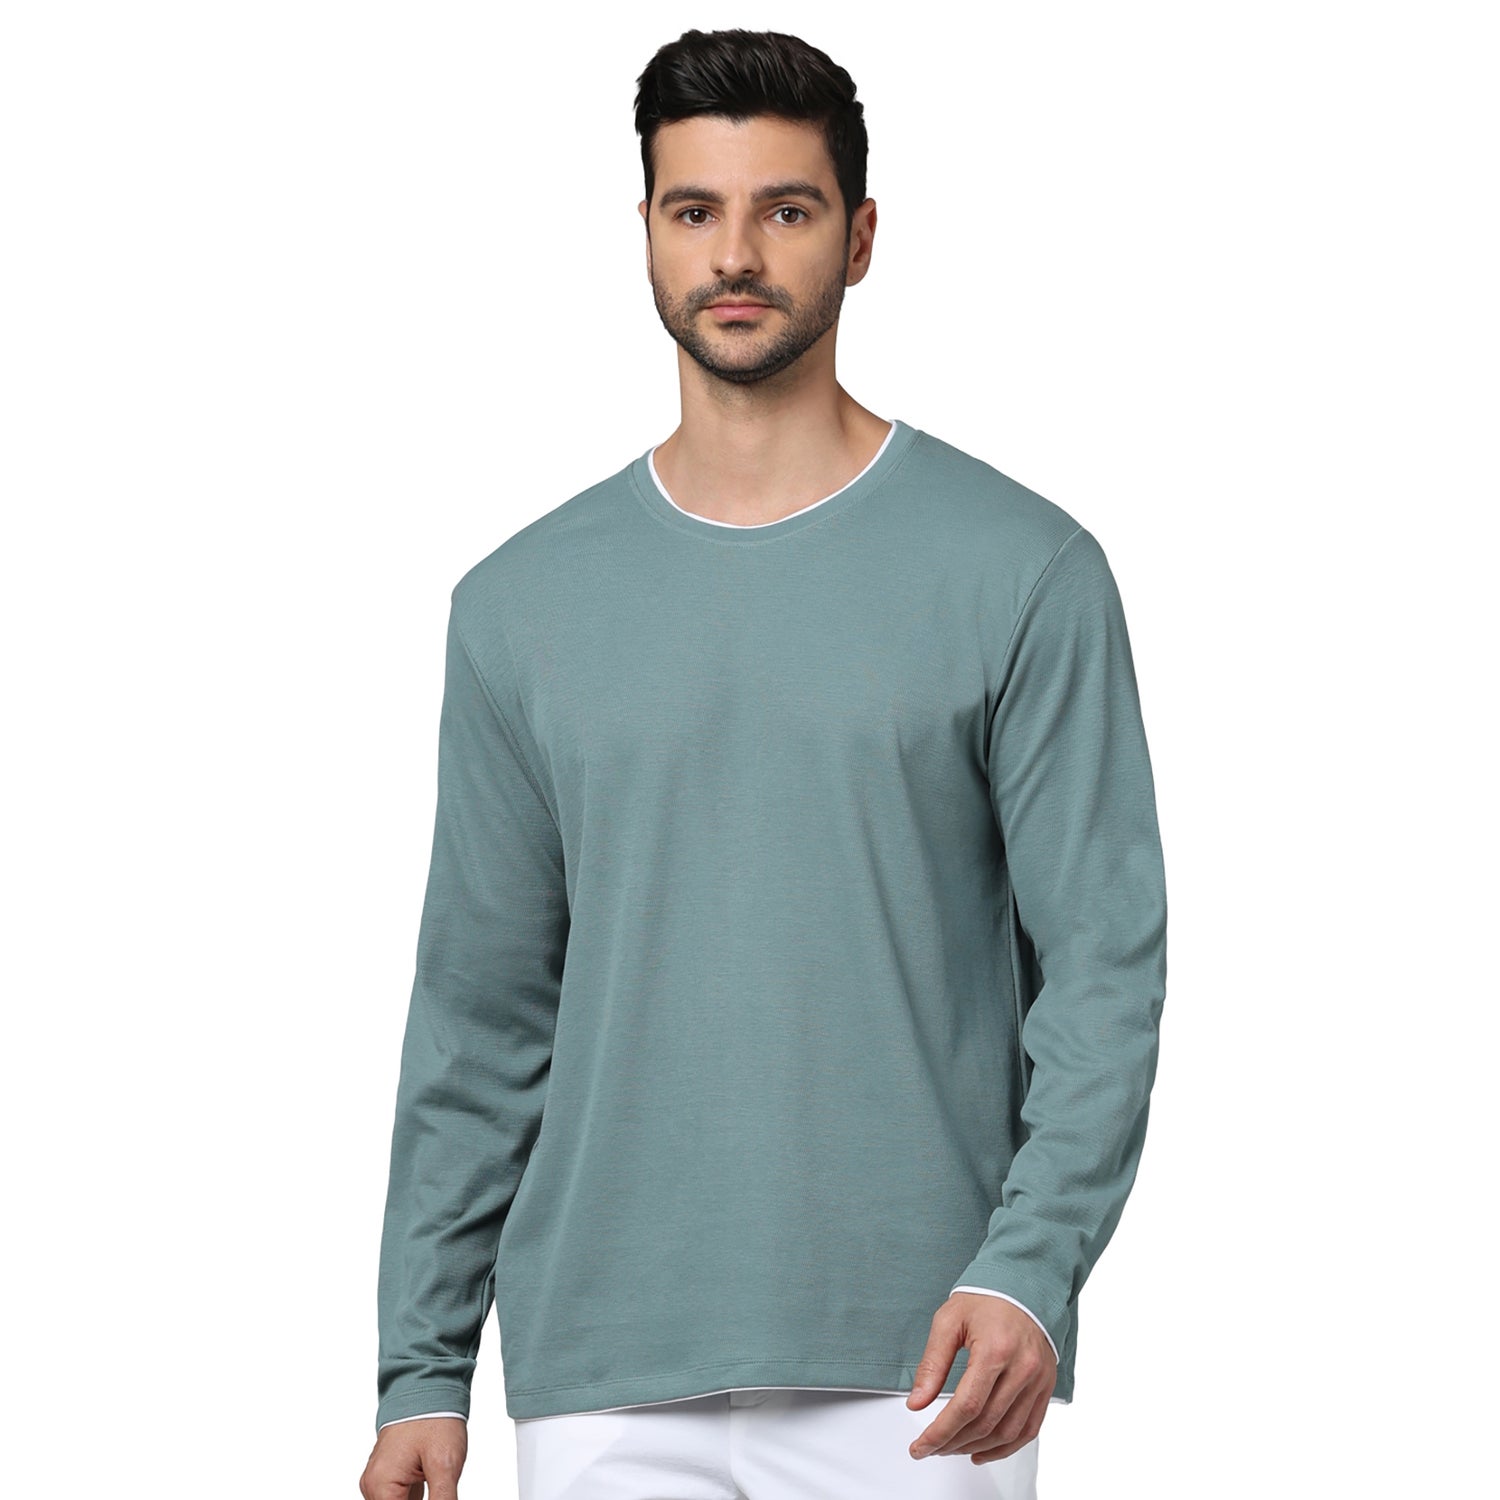 Men's Blue Round Neck Solid Regular Fit Cotton Fashion Tshirt (FEEYELET)